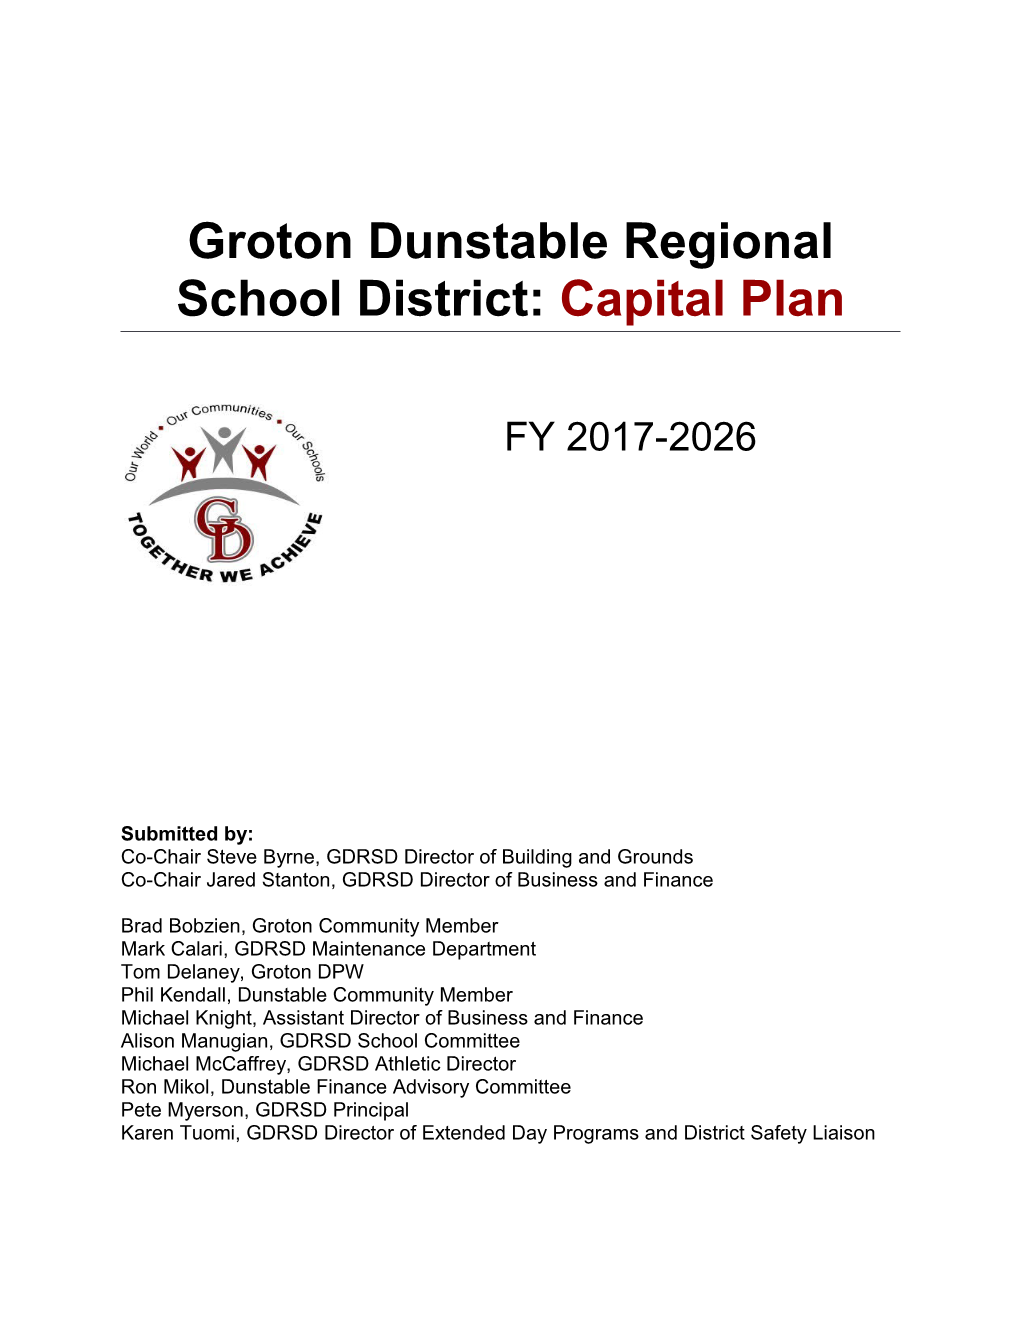 Groton Dunstable Regional School District: Capital Plan